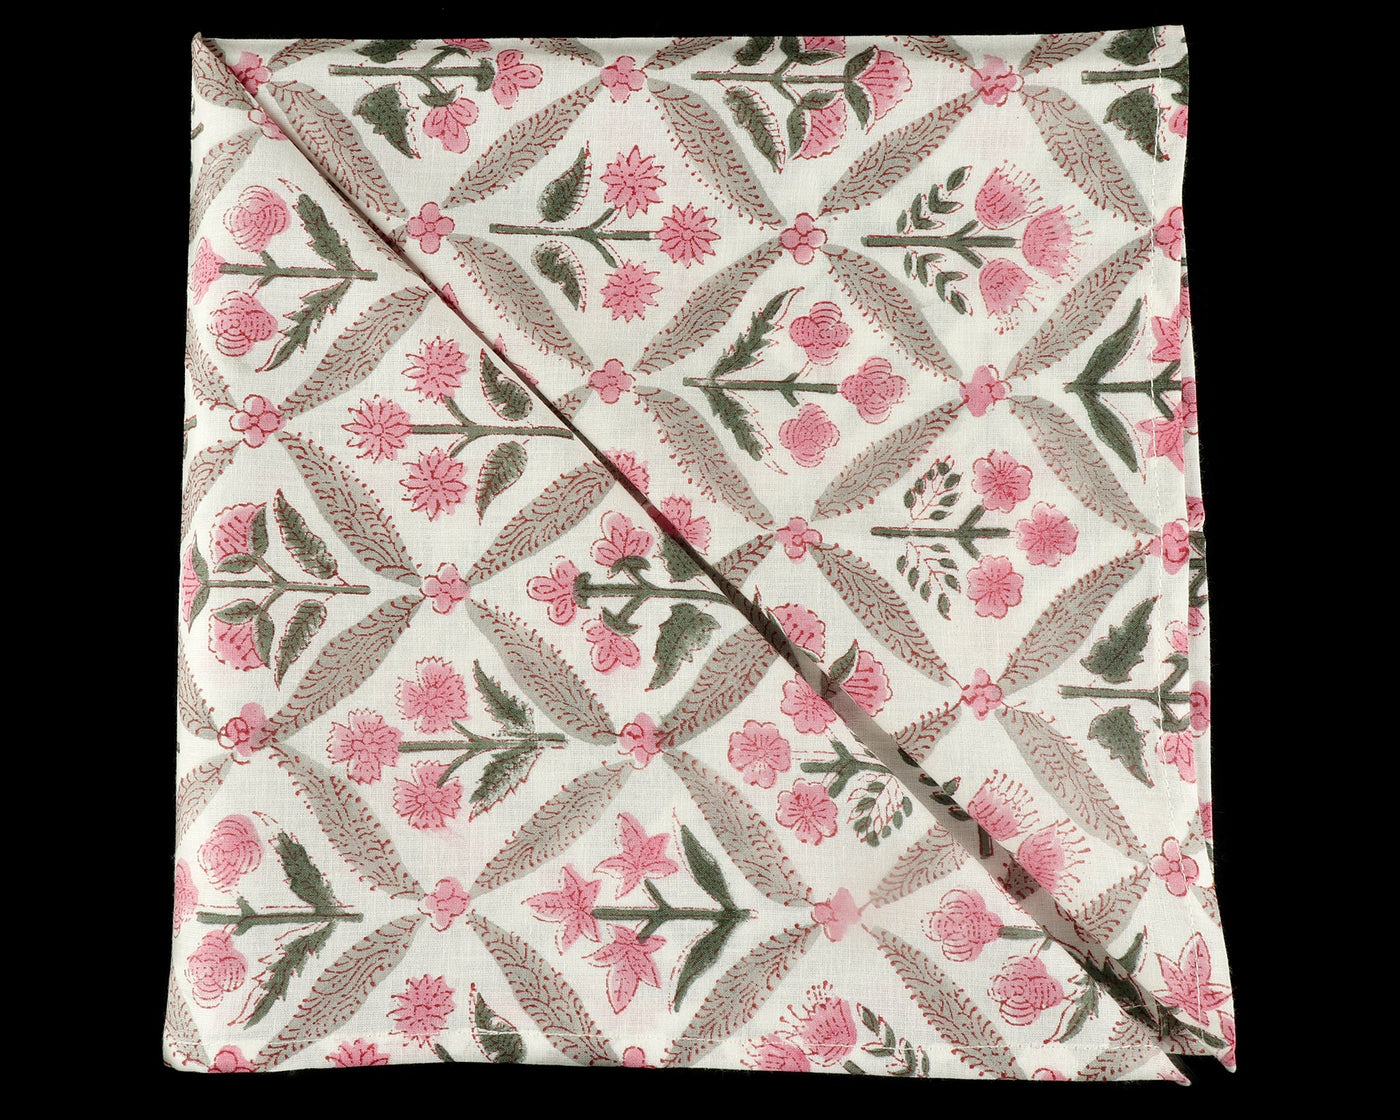 Fabricrush Watermelon Pink, Artichoke and Seaweed Green Indian Hand Block Printed Cotton Cloth Napkins, 18x18"- Cocktail Napkins, 20x20"- Dinner Napkins